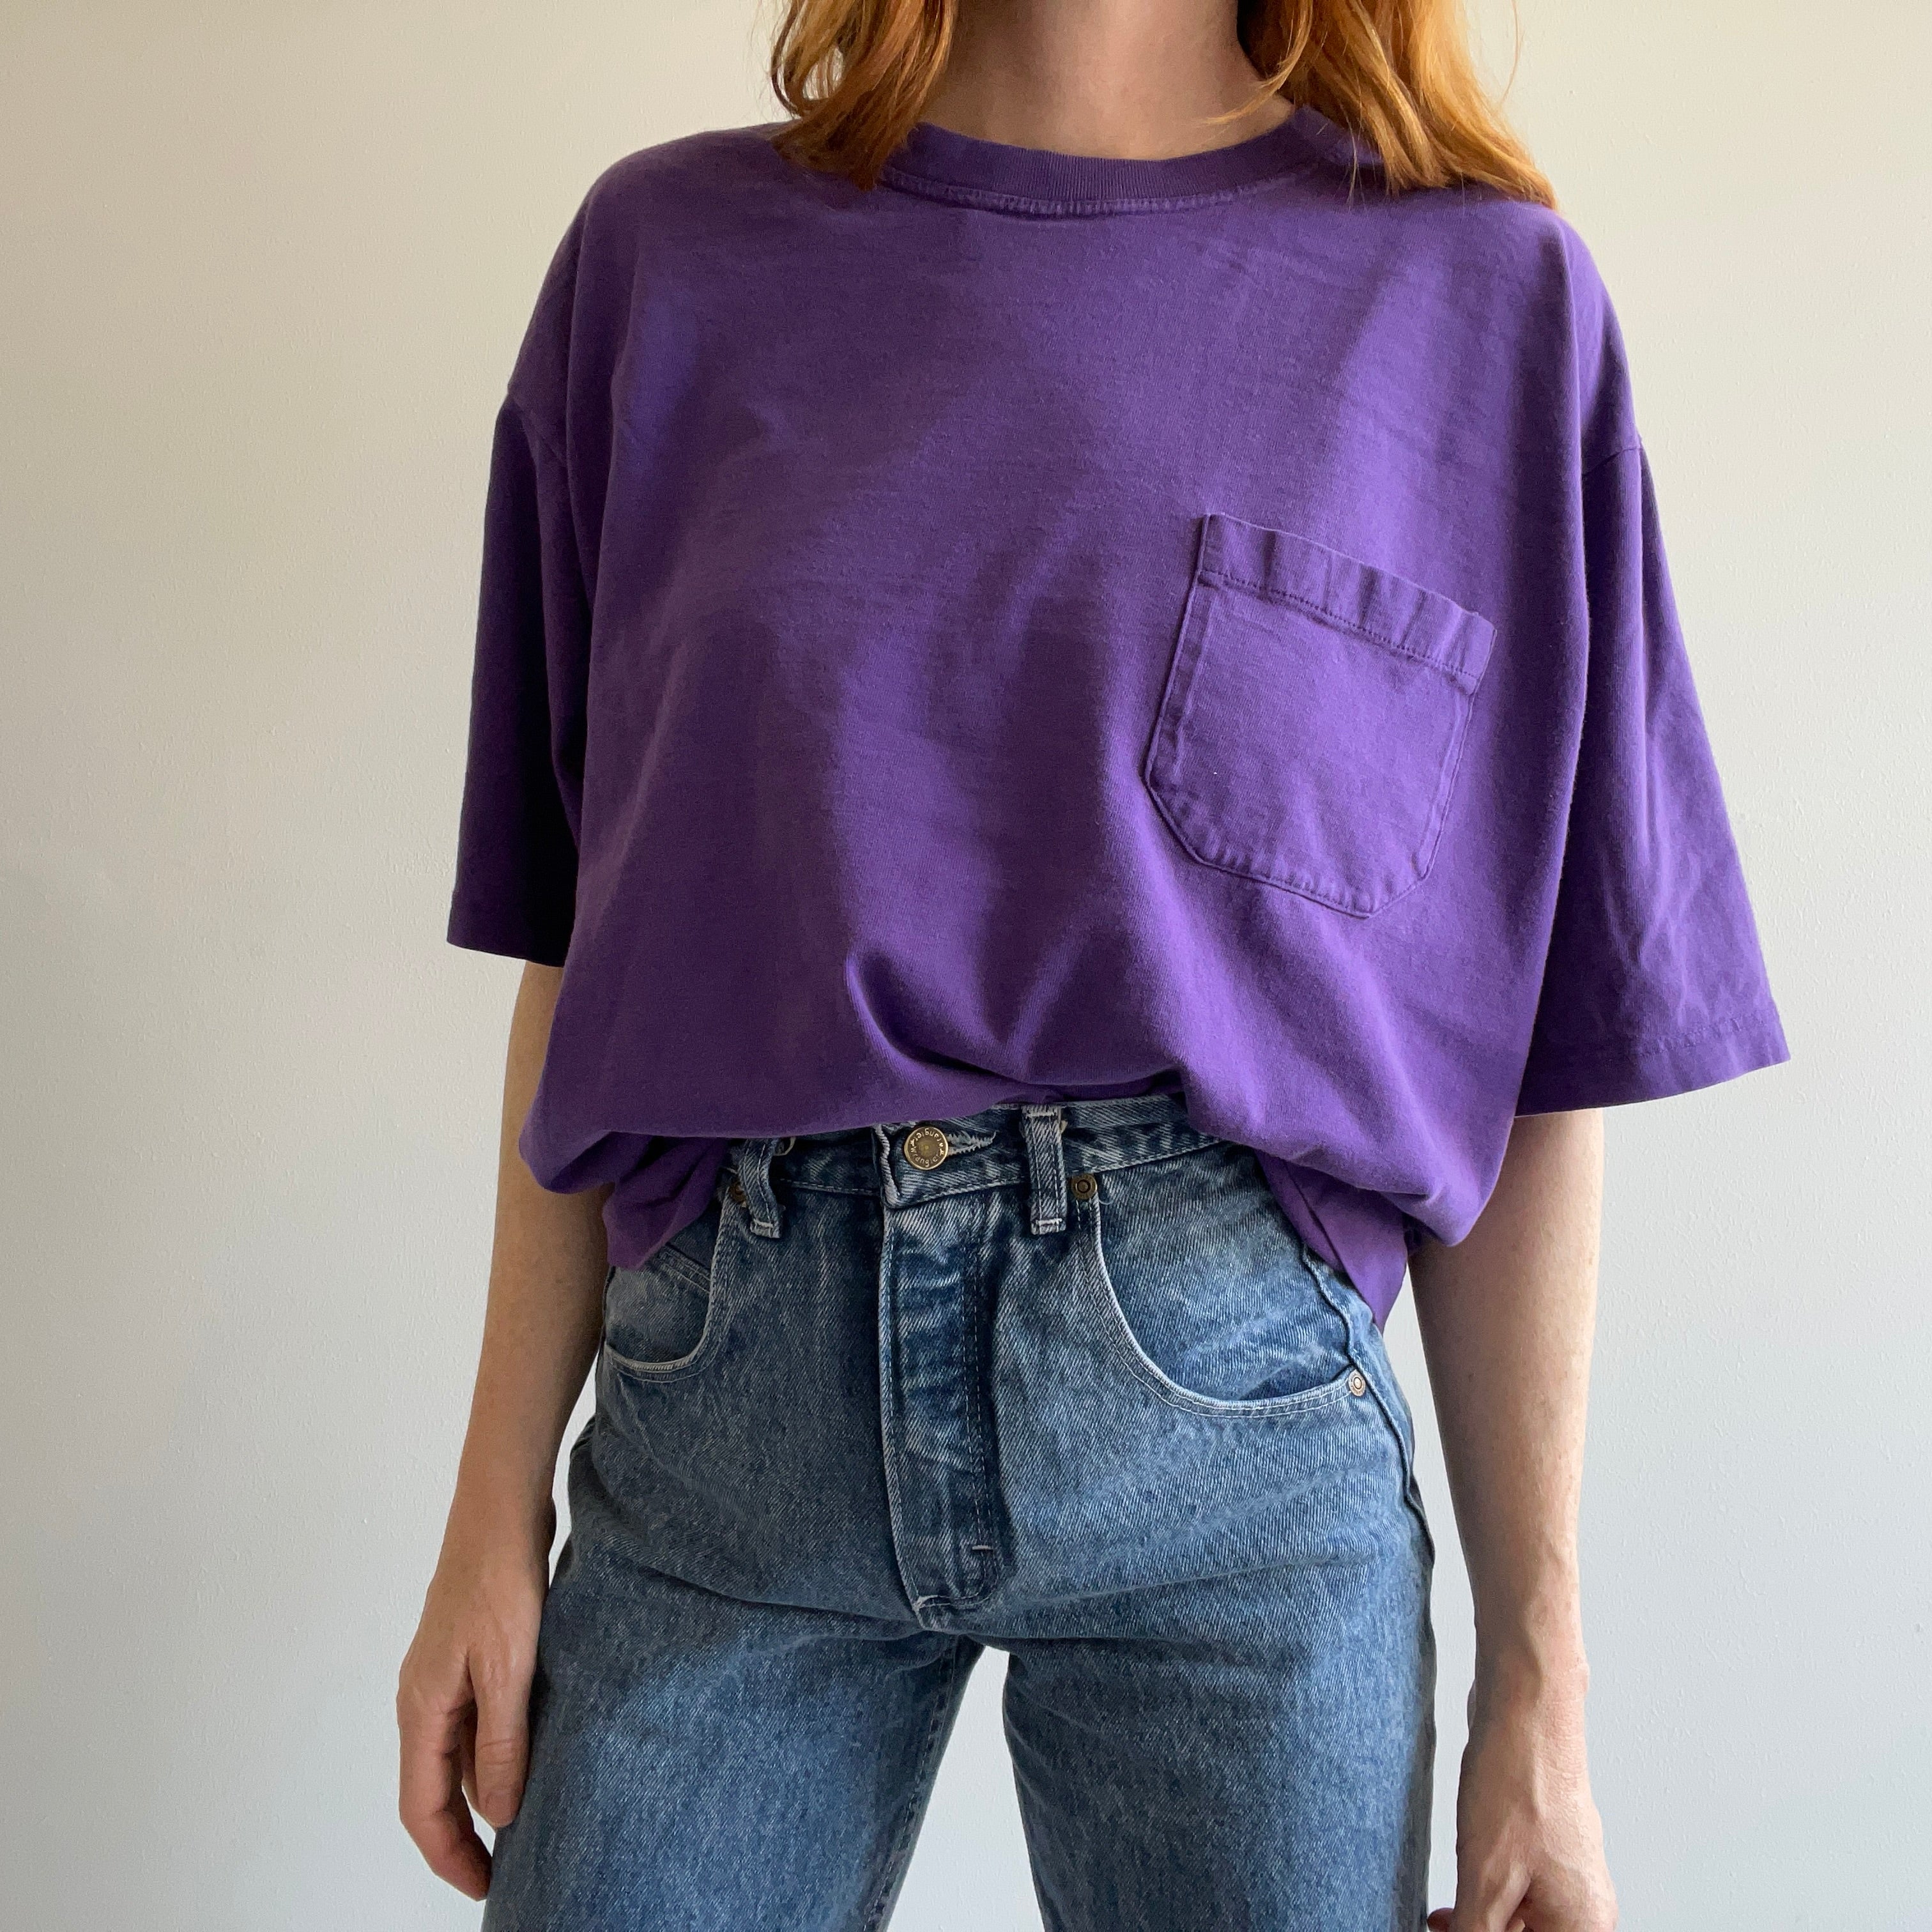 1990s Blank Purple USA Made Cotton Pocket T-Shirt